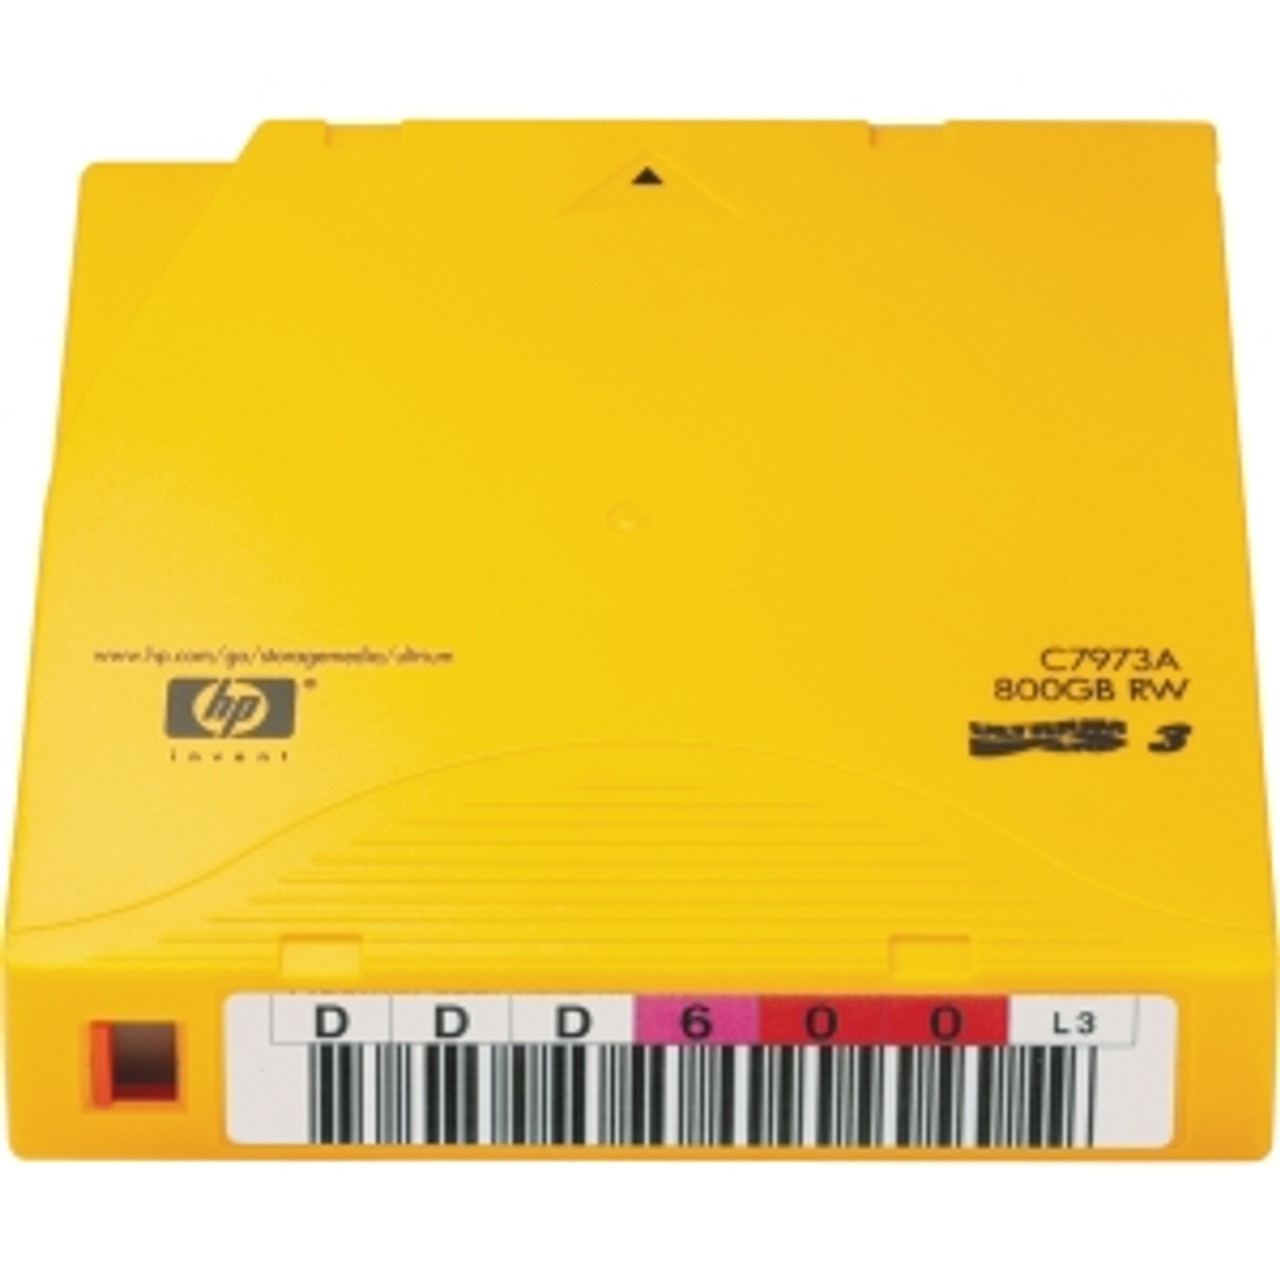 C7973AK - HP LTO-3 Ultrium 400/800GB RW Storage Media non Custom Label Tape Data Cartridge